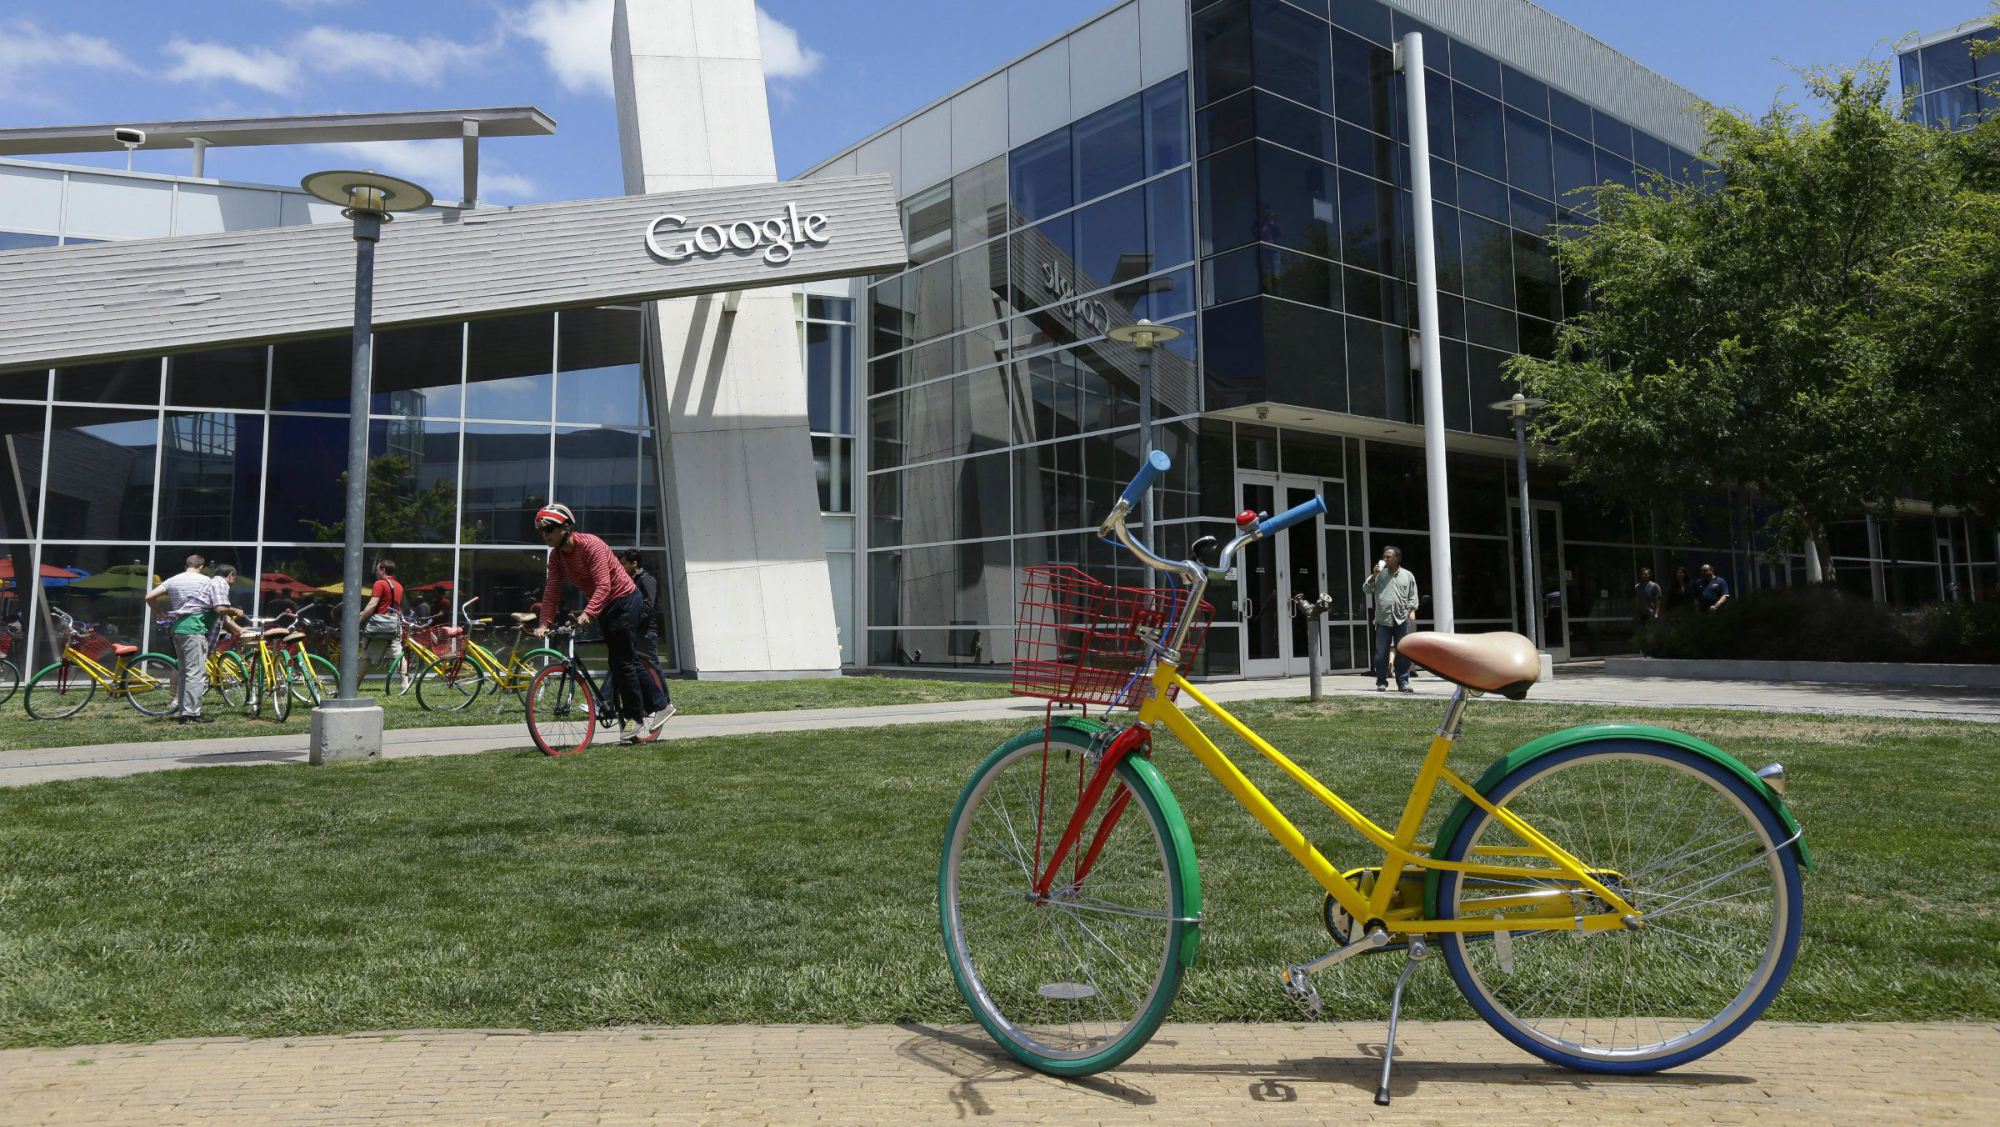 What it’s like to run Google’s $2 billion venture capital fund